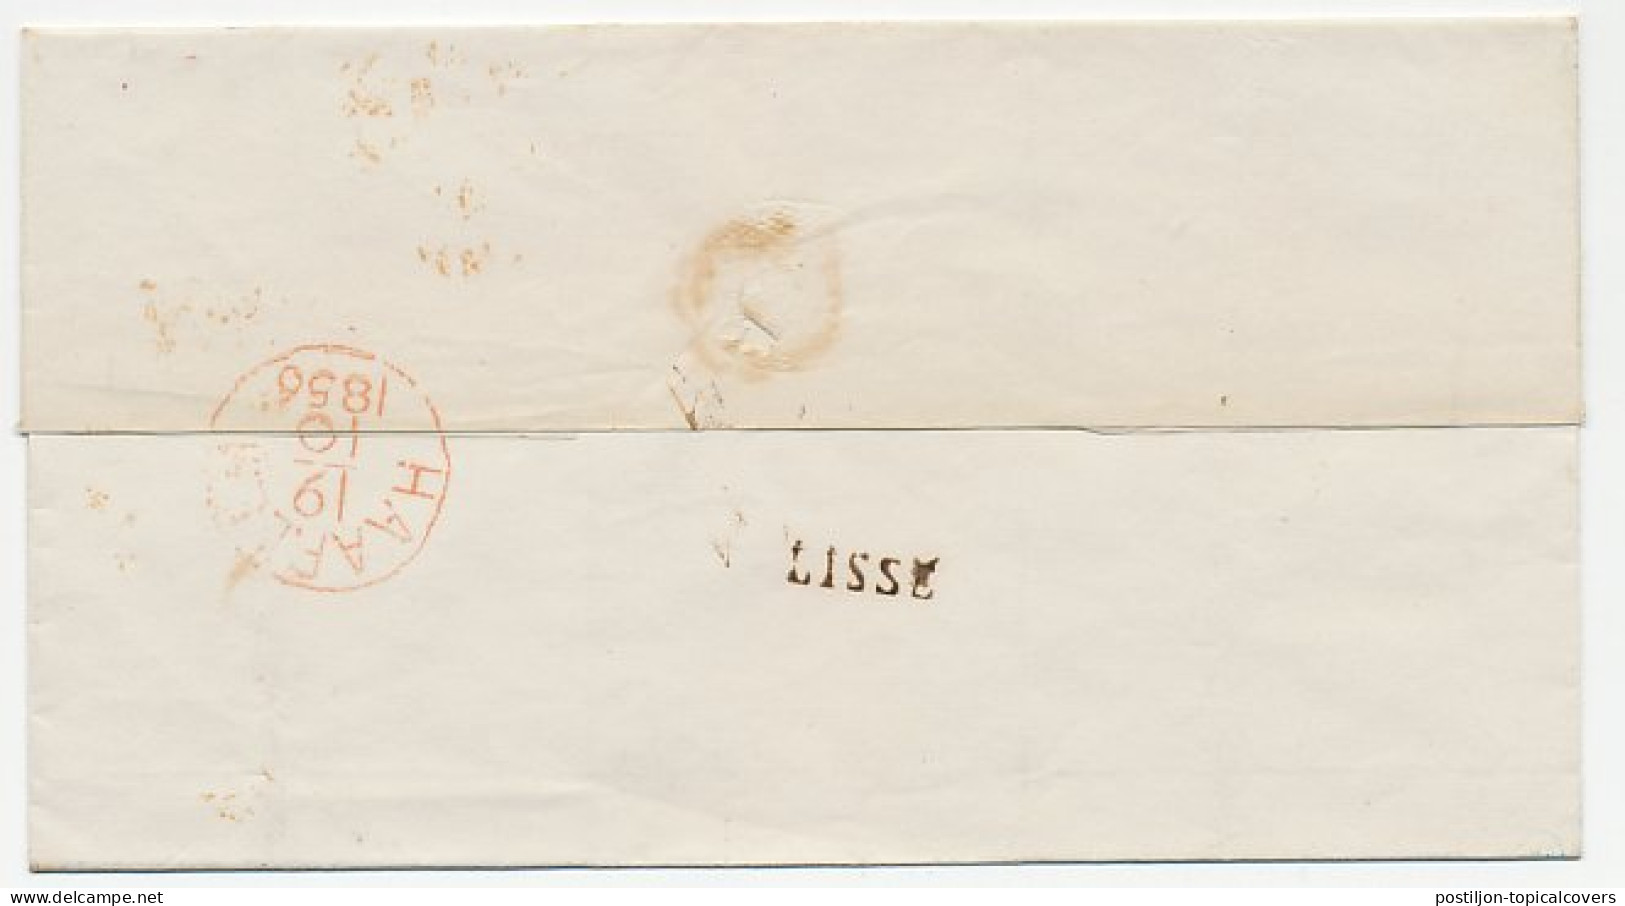 Gebroken Ringstempel : Leiden 1856 - Covers & Documents